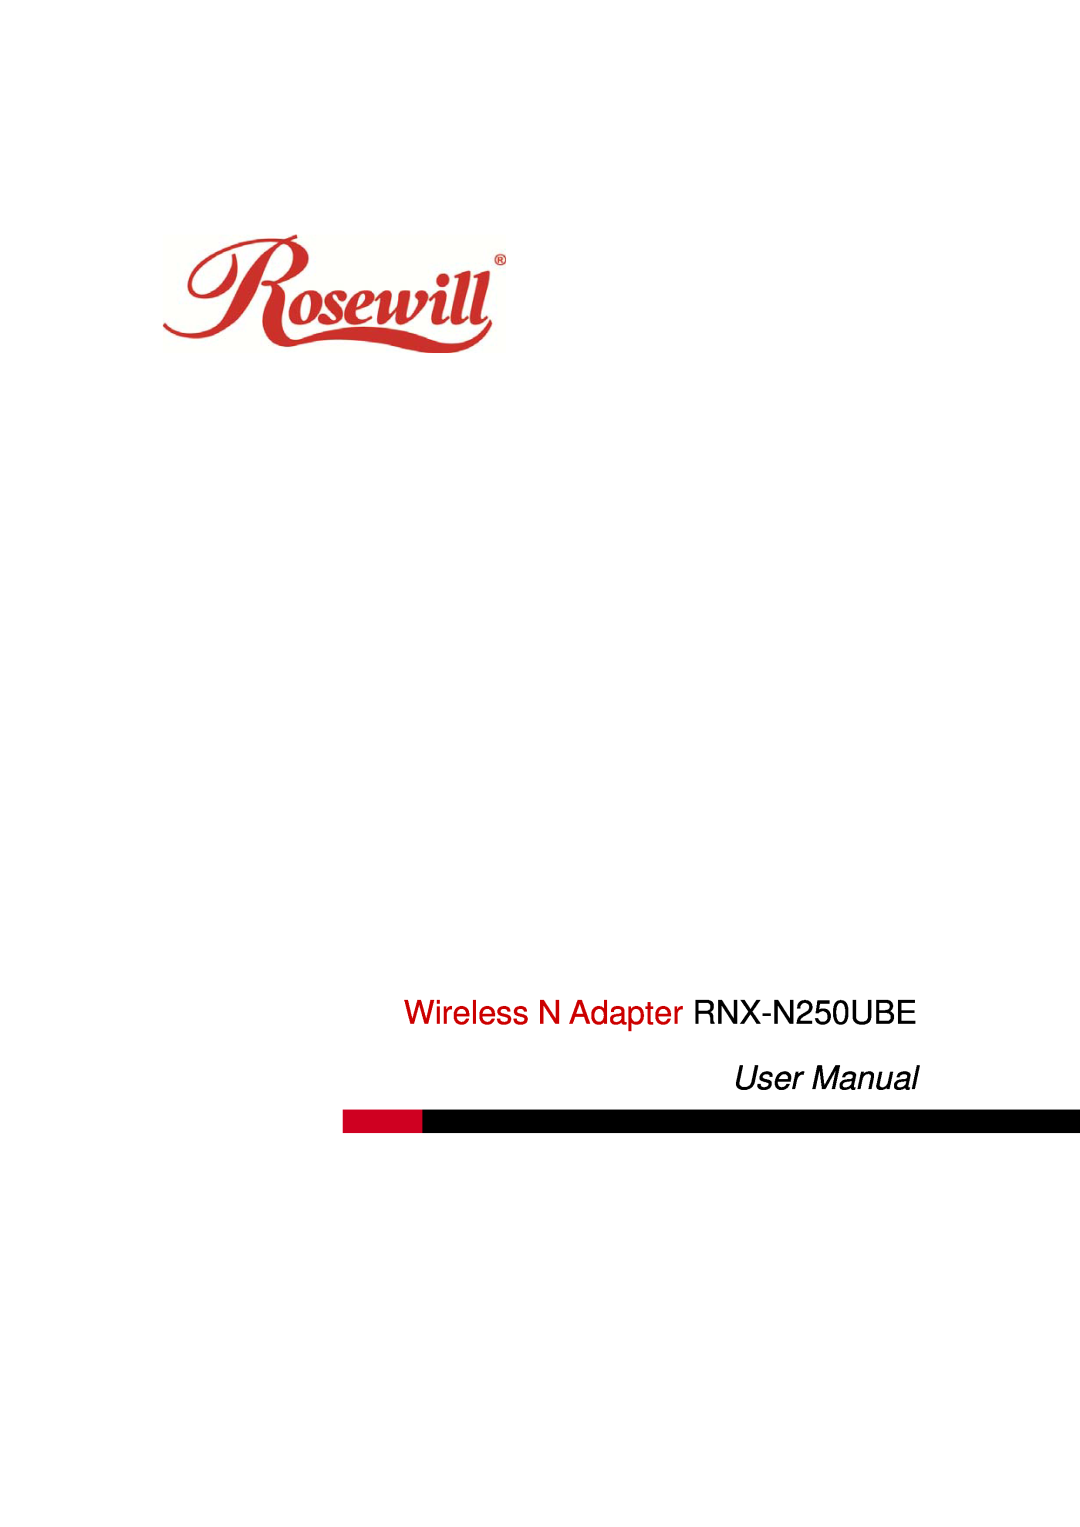 Rosewill user manual Wireless N Adapter RNX-N250UBE, User Manual 